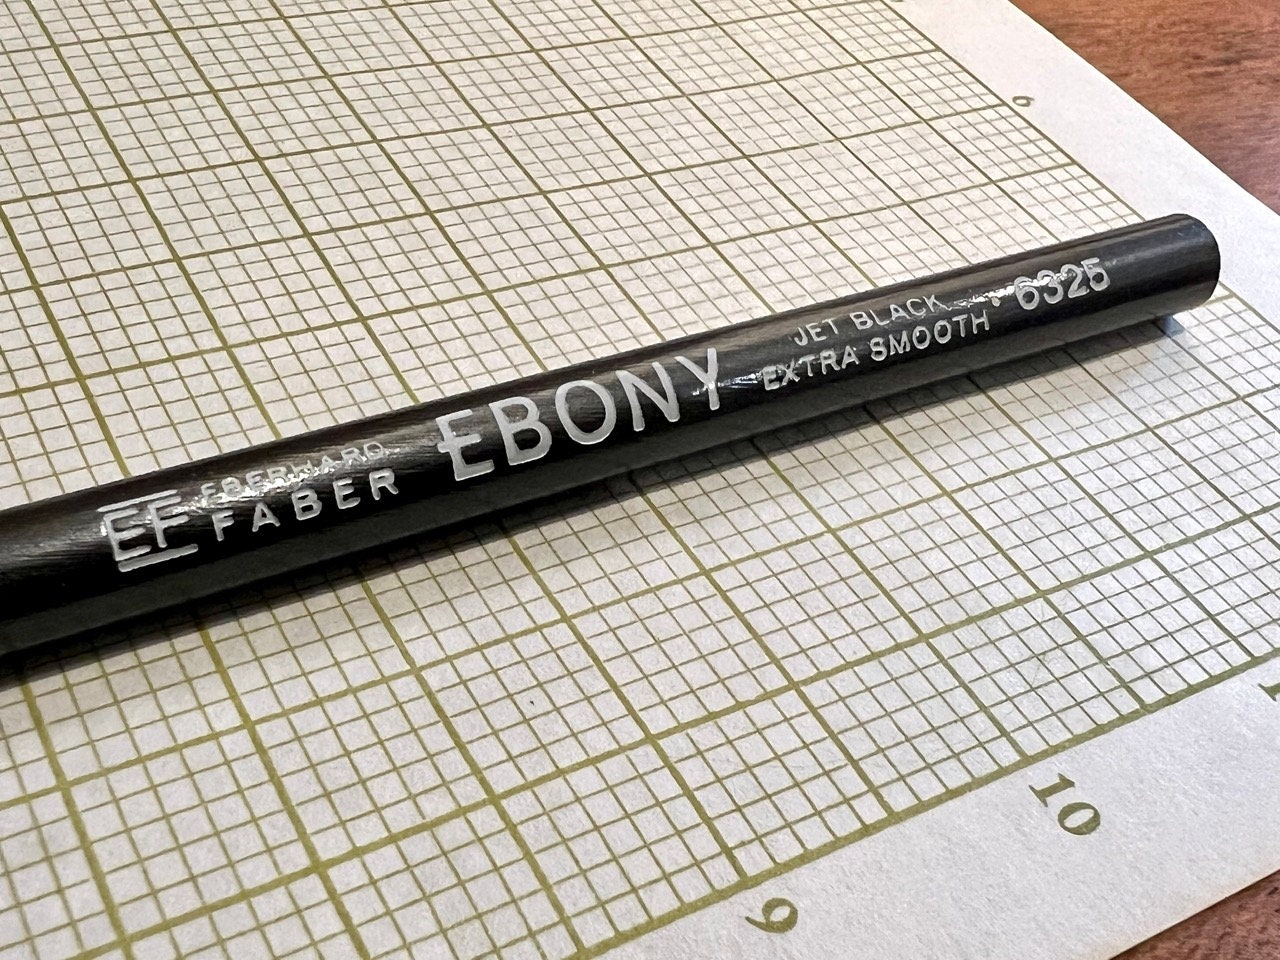 10 Vtg Eberhard Faber Design Ebony 6325 Jet Black Extra Smooth Drawing  Pencils